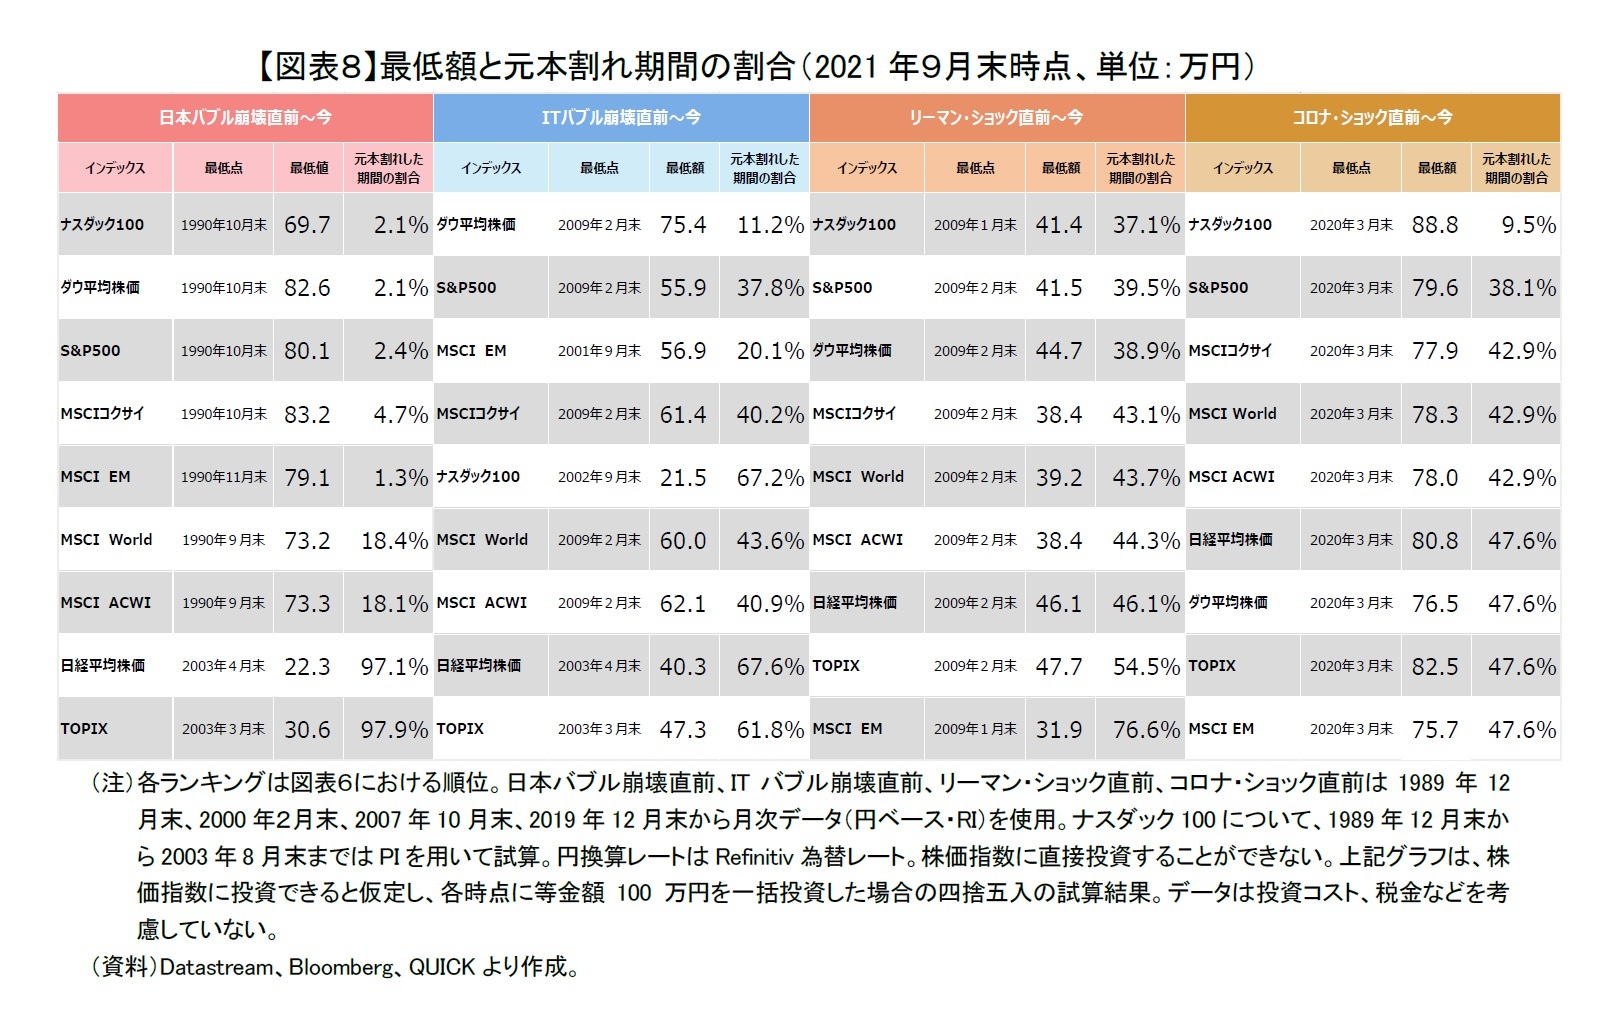 【図表８】最低額と元本割れ期間の割合（2021年９月末時点、単位：万円）